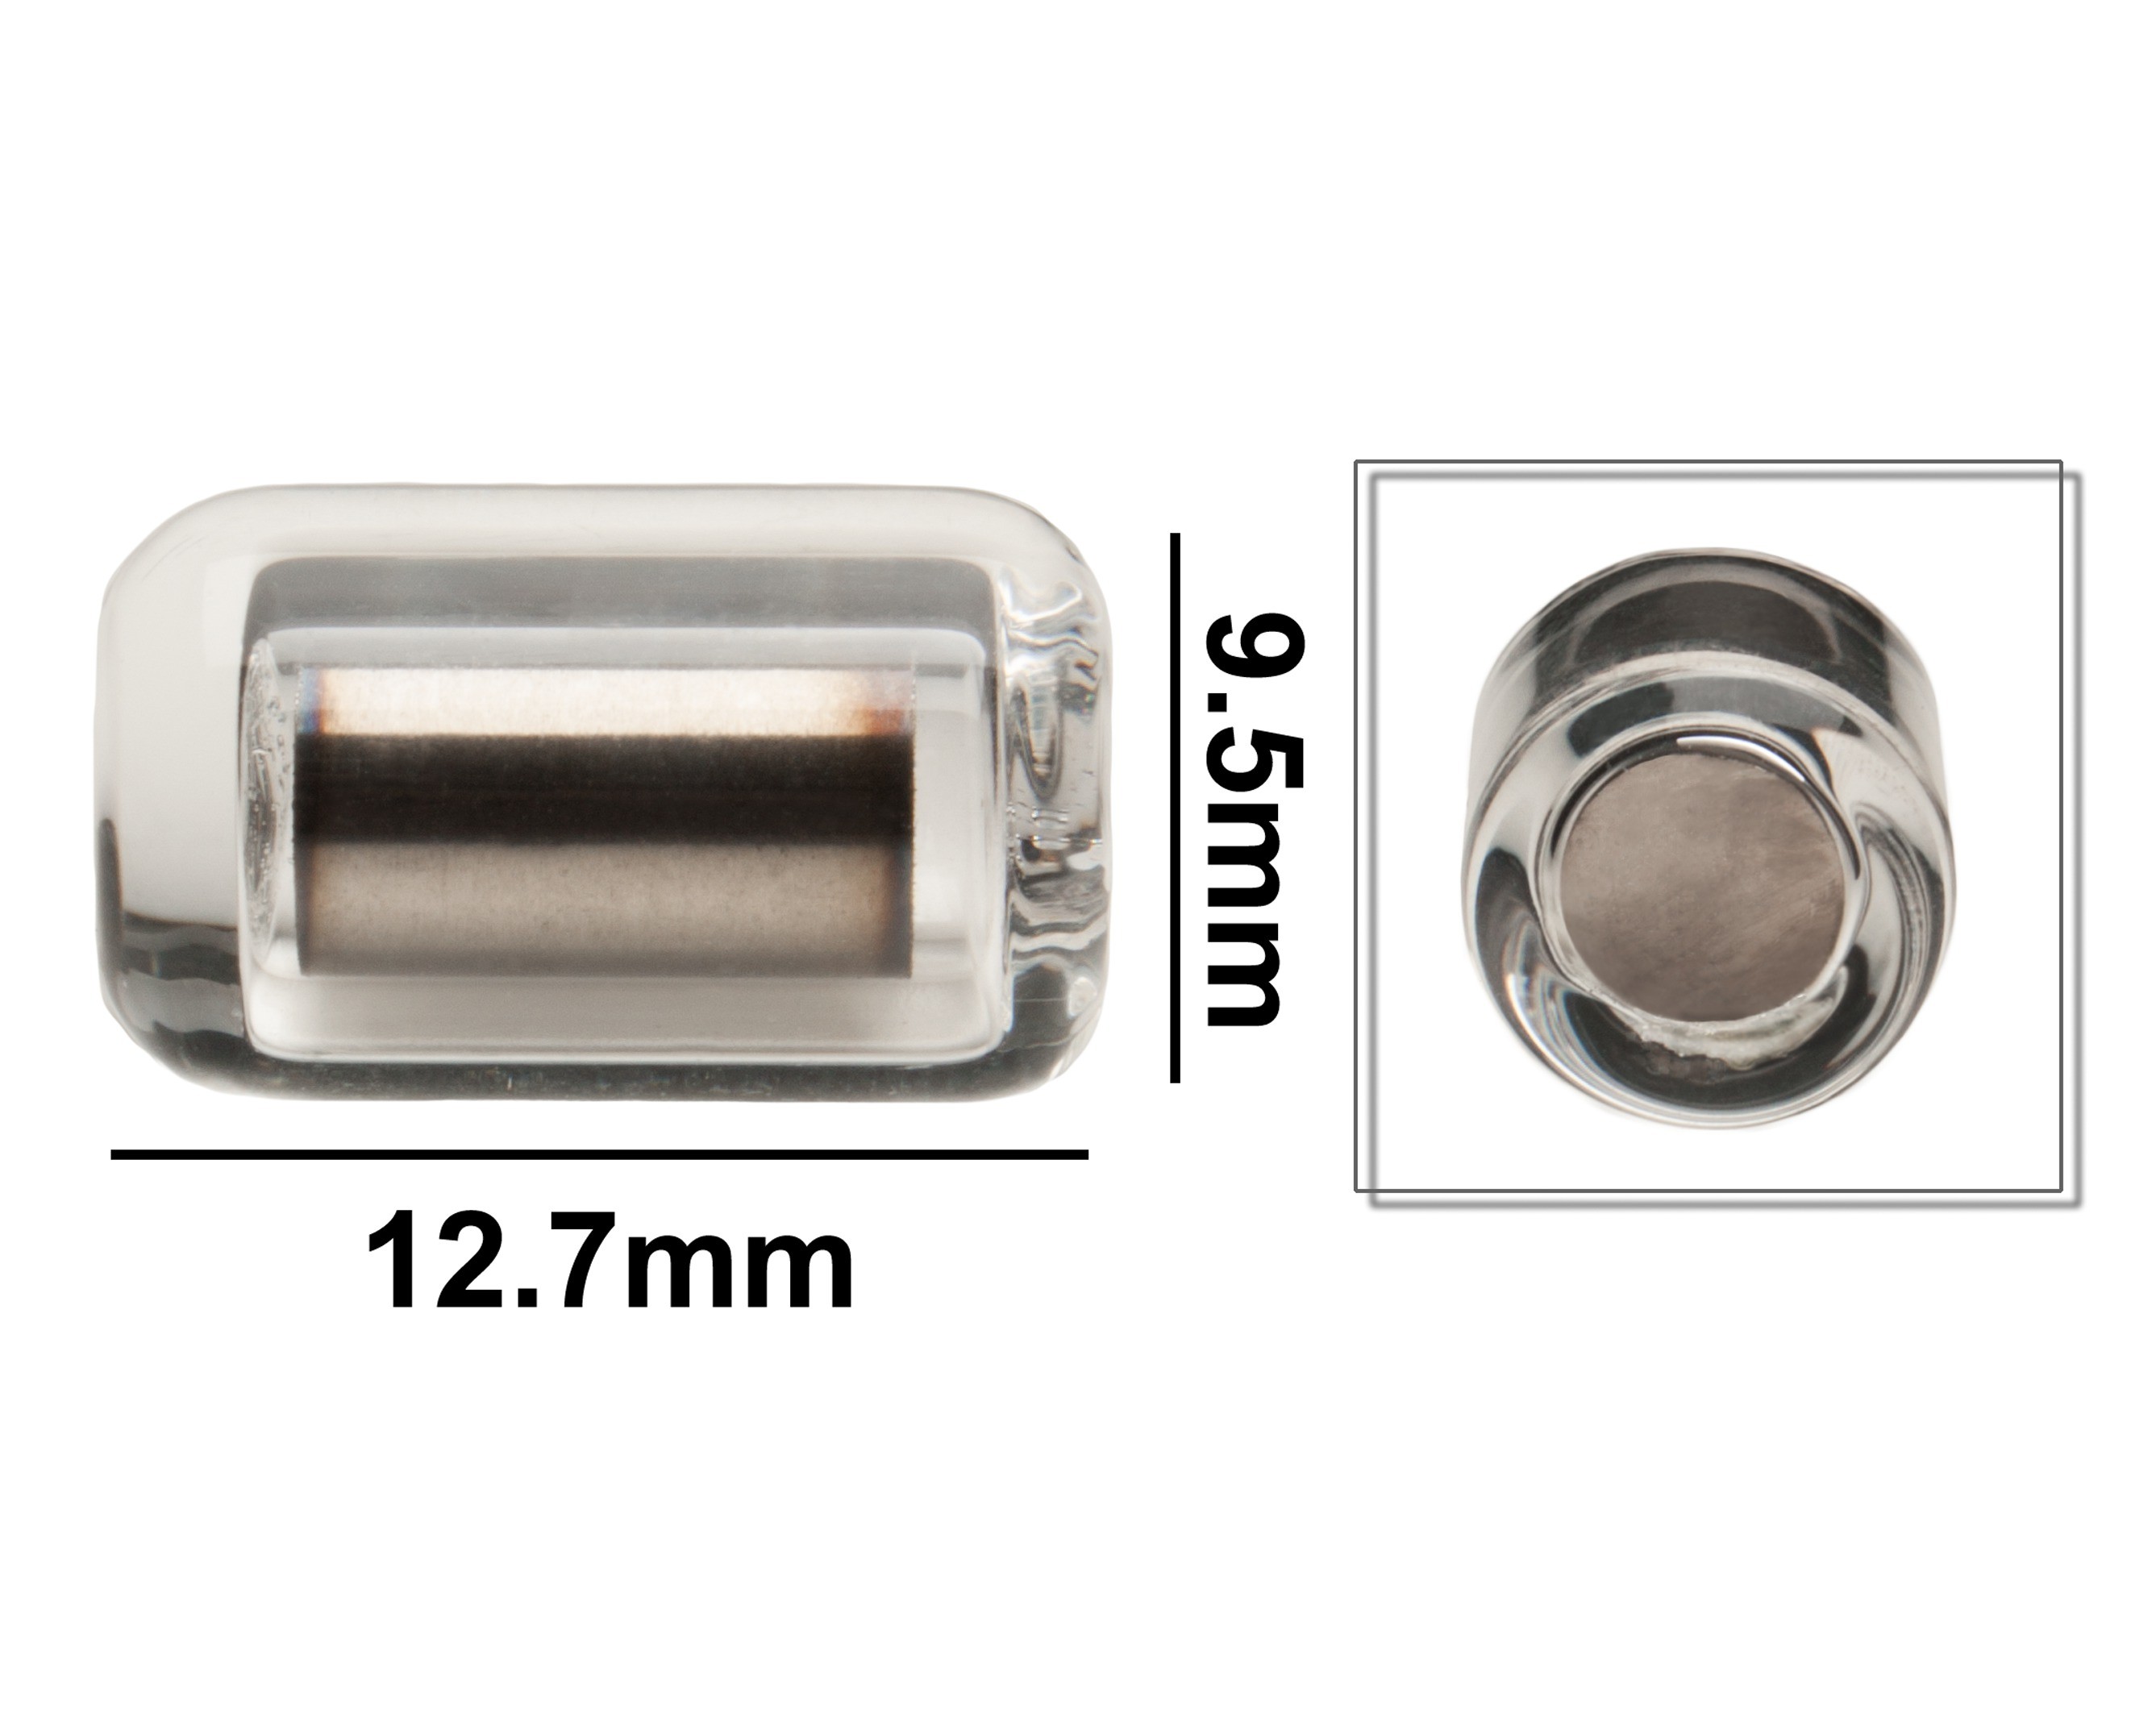 SP Bel-Art Pyrex Magnetic Stirring Bar; Glass Encapsulated, 12.7 x 9.5mm